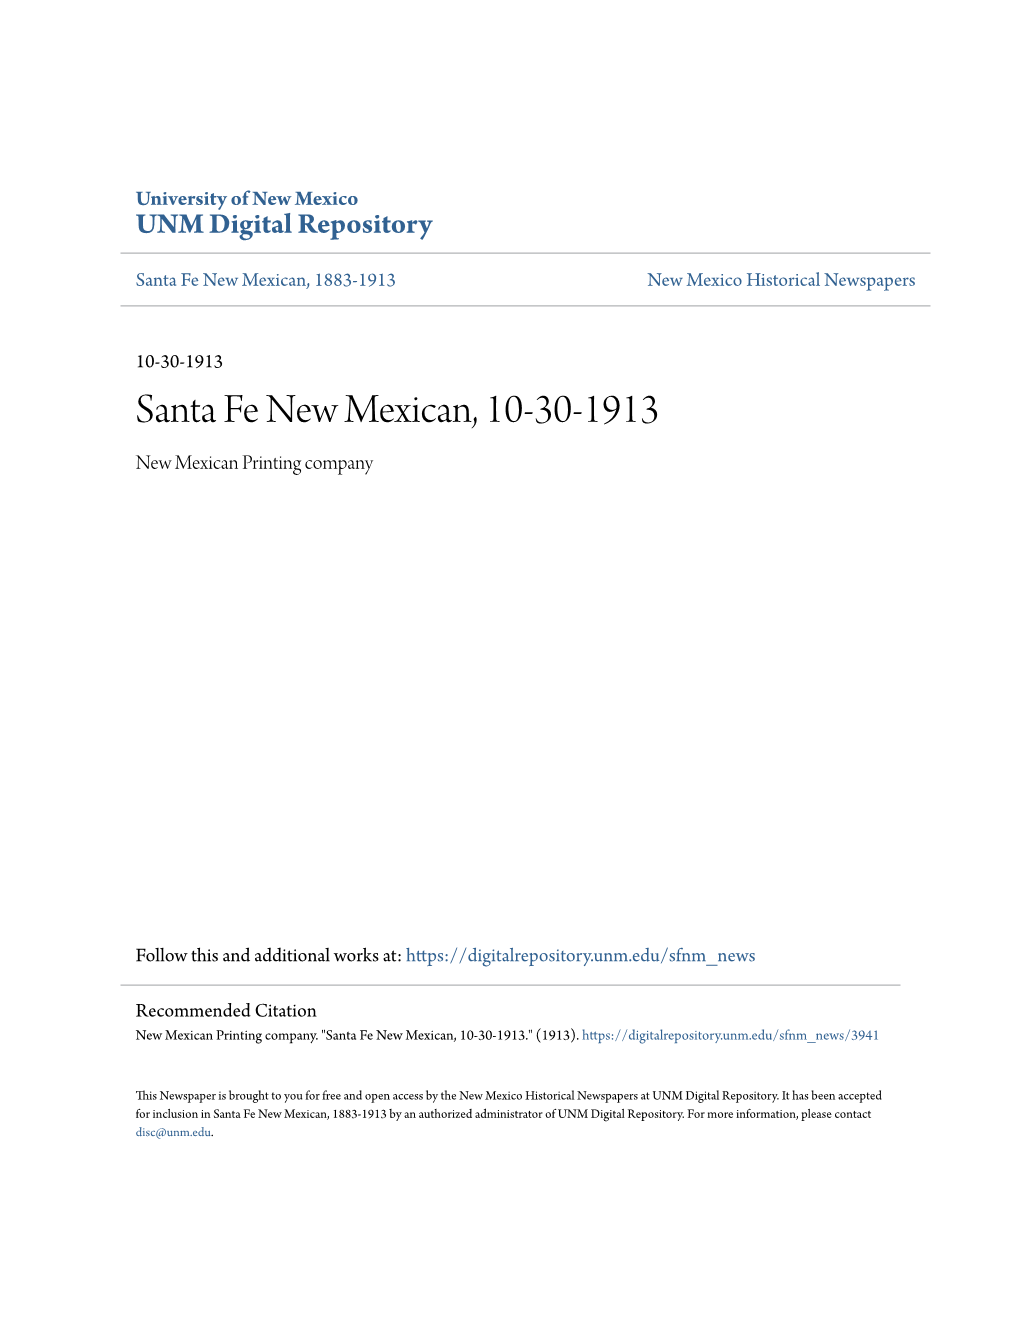 Santa Fe New Mexican, 10-30-1913 New Mexican Printing Company